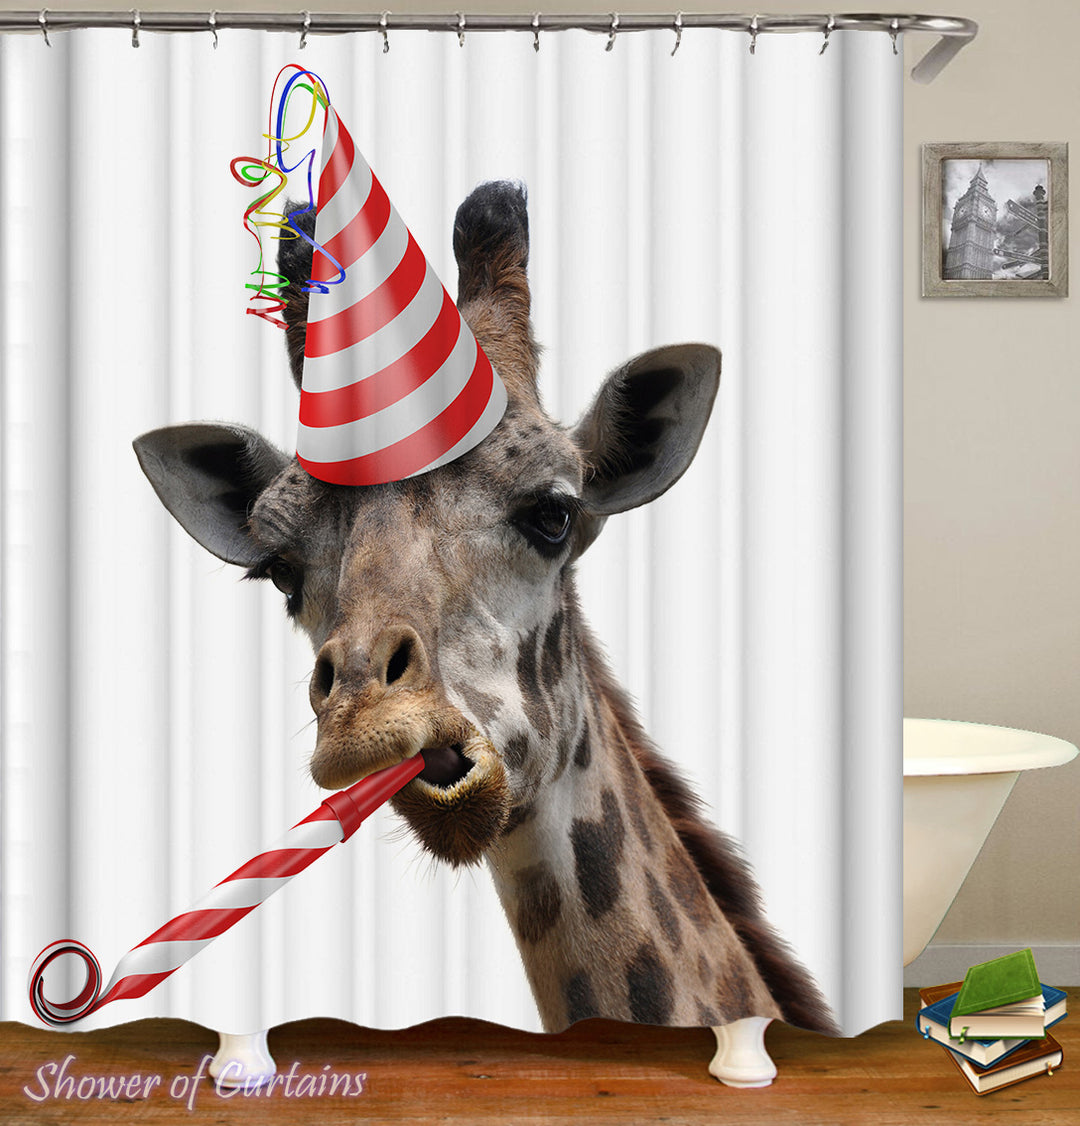 Partying Giraffe shower curtain